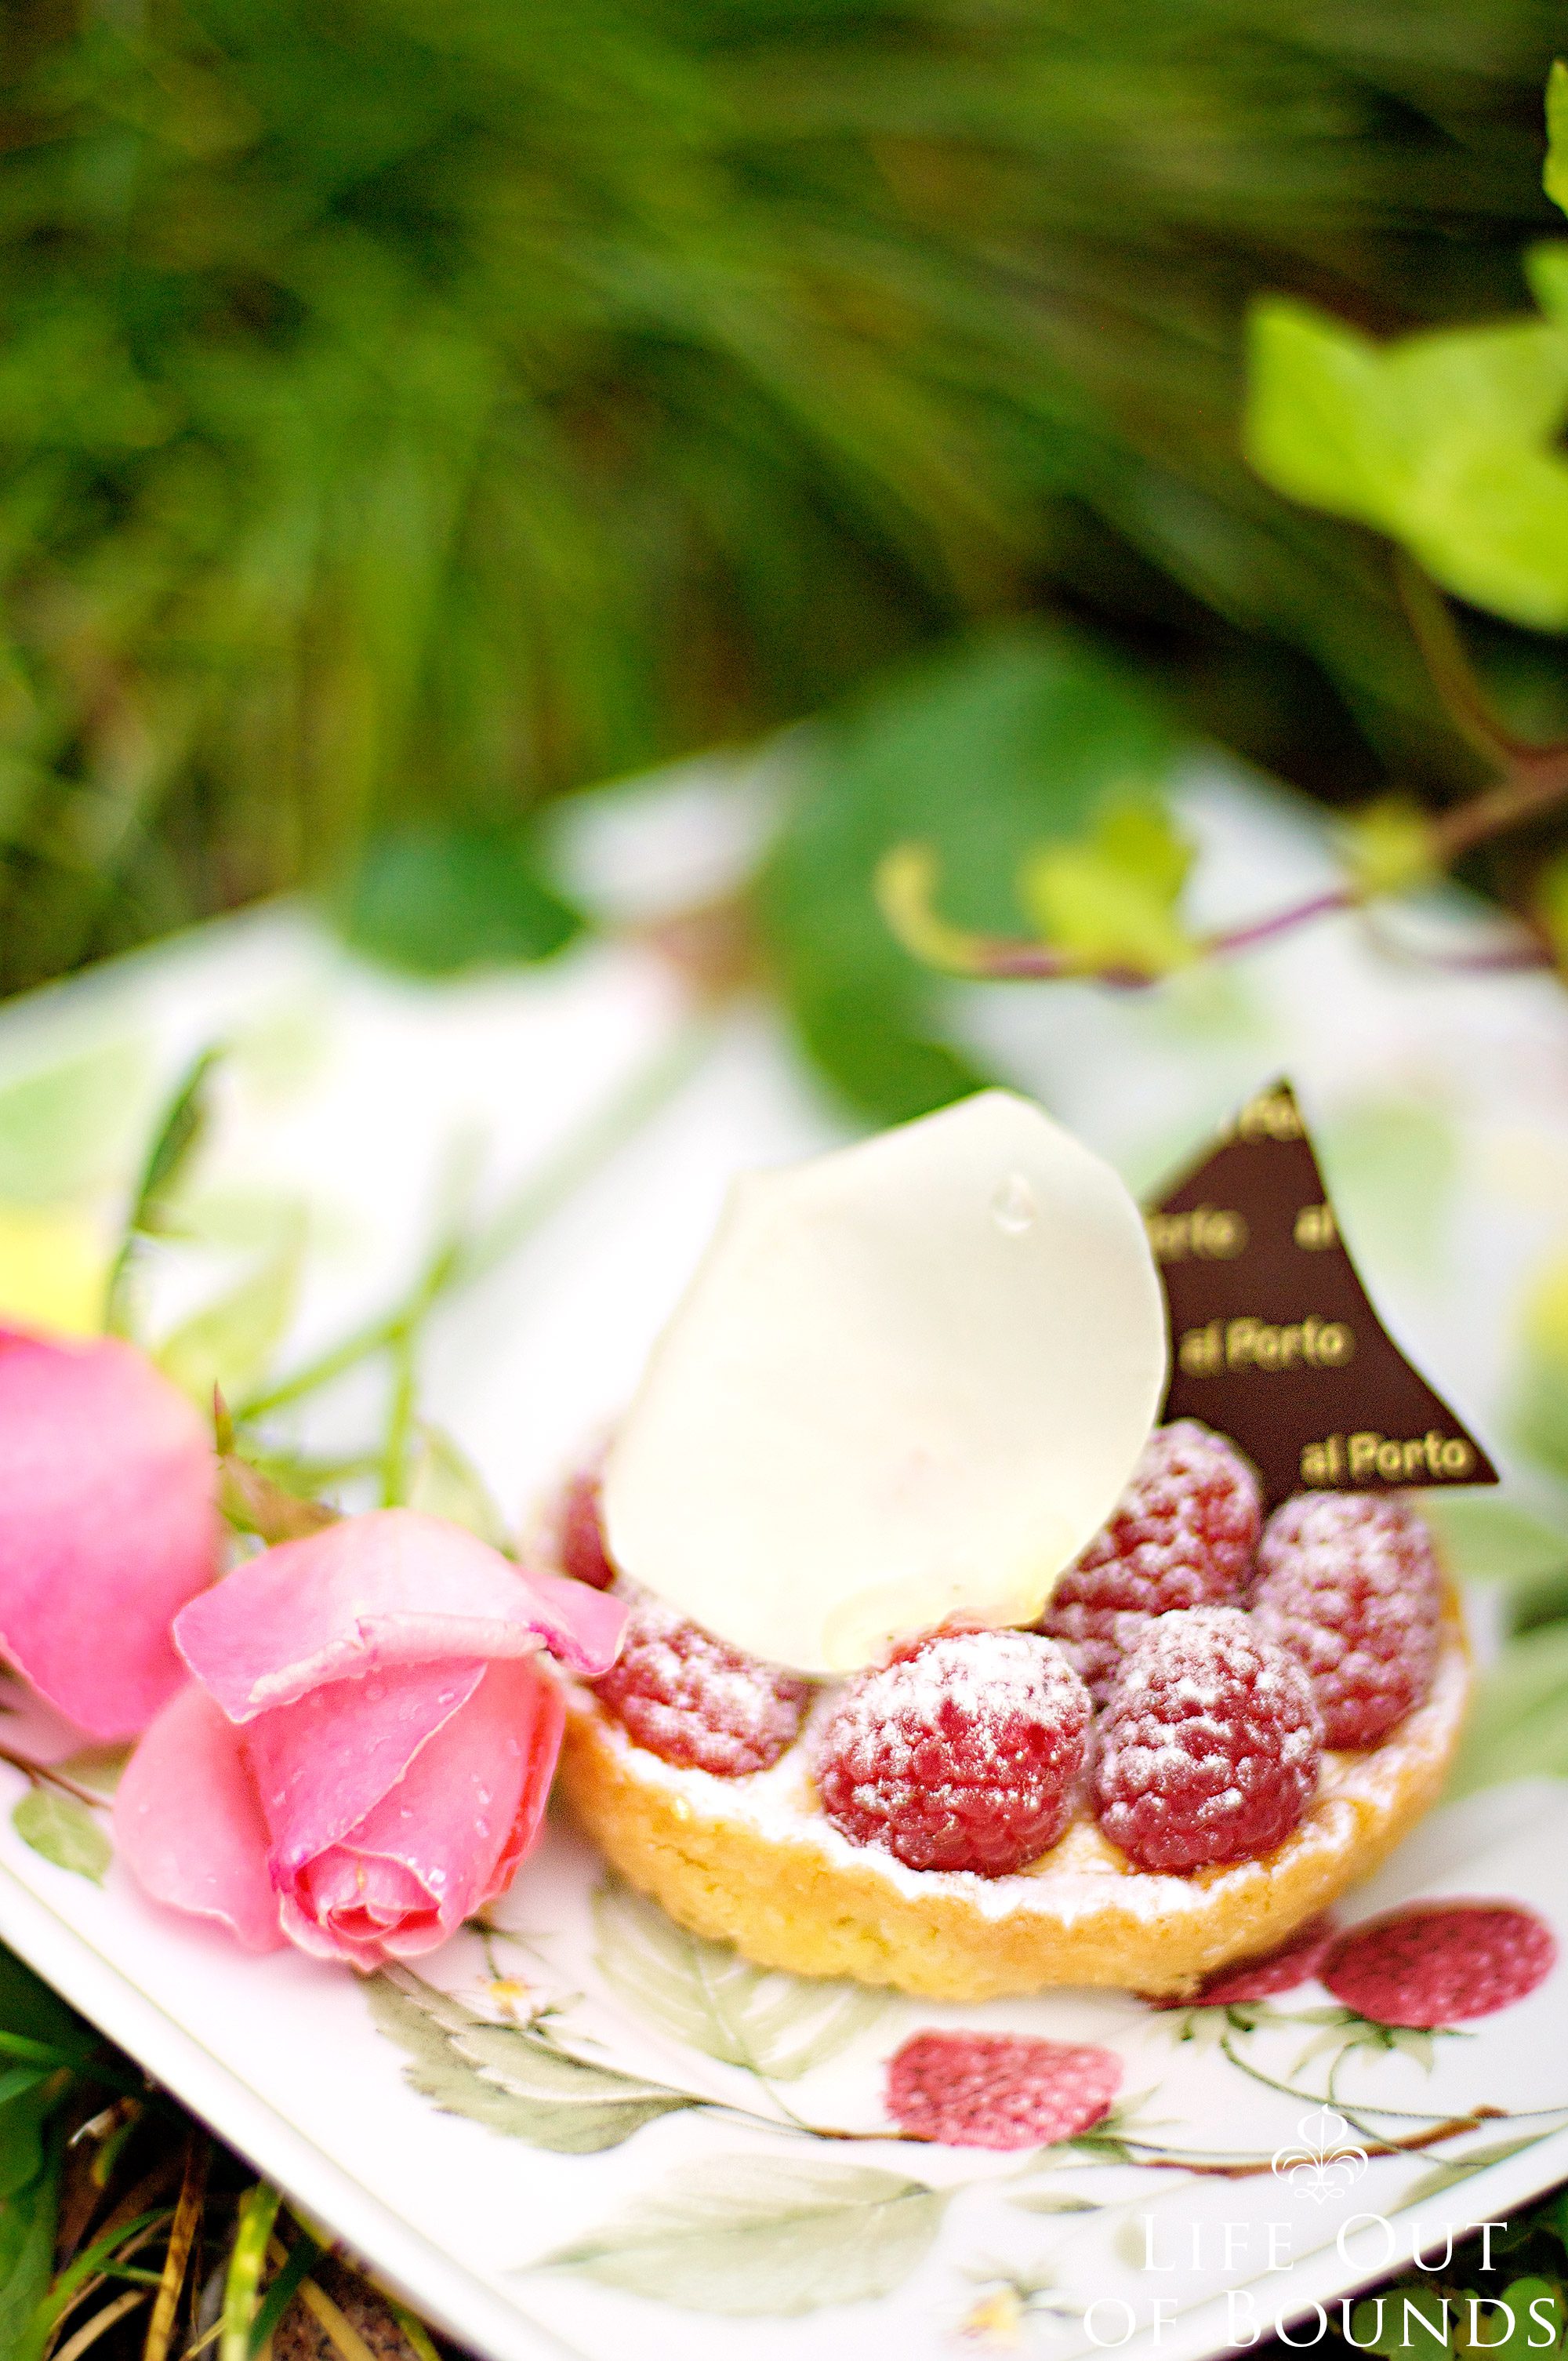 Raspberry-and-passion-fruit-tartlet-by-Ristorante-Grand-Cafe-al-Porto-in-Lugano-Switzerland